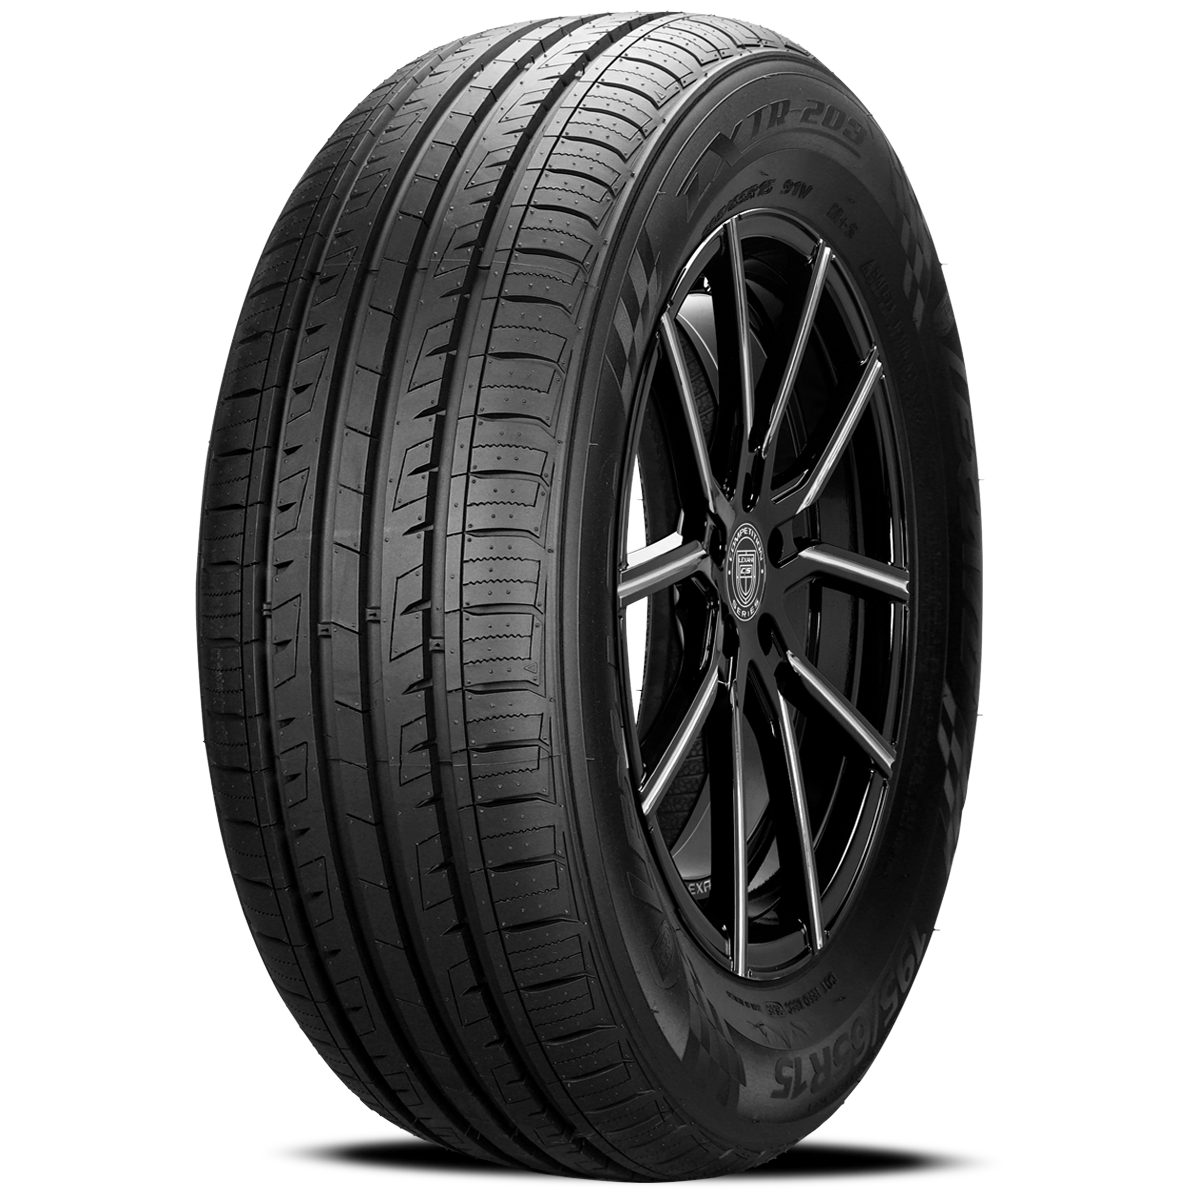 LEXANI LXTR-203 185/65R15 (24.4X7.3R 15) Tires